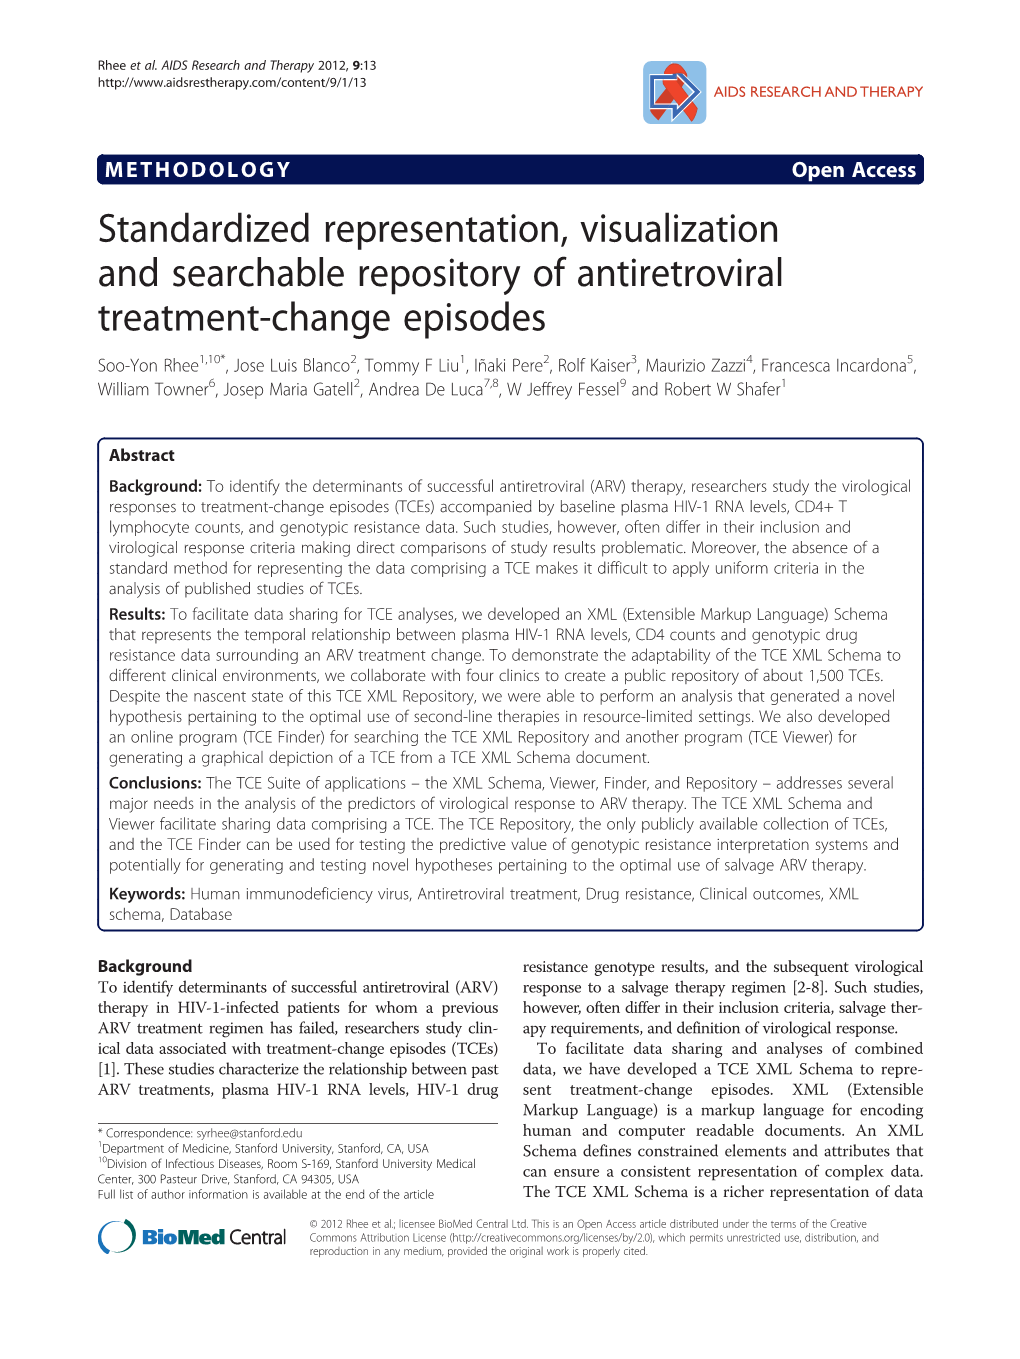 Standardized Representation, Visualization and Searchable